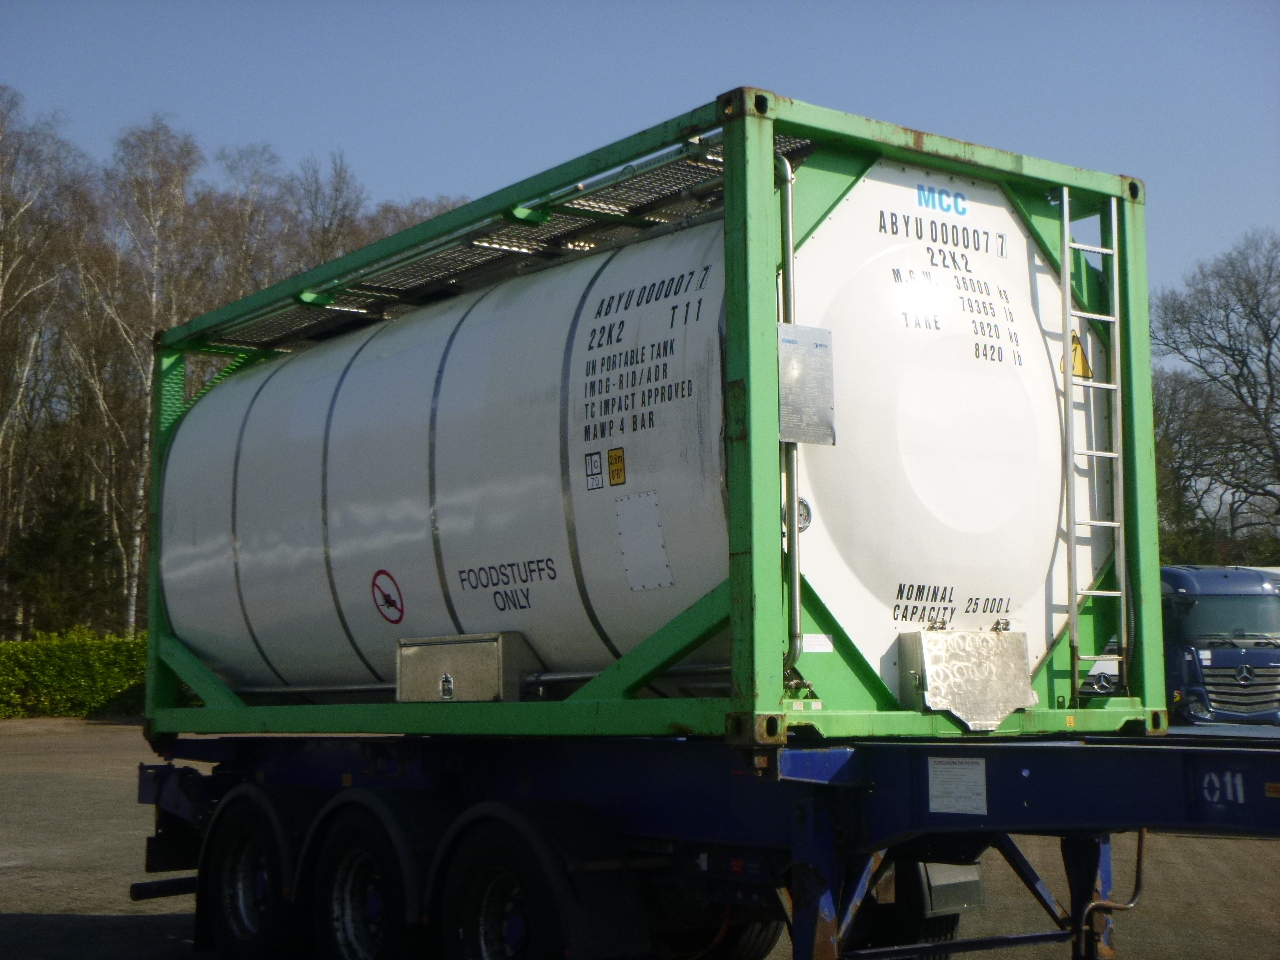 Tankcontainer, Semitrailer Danteco Food tank container inox 20 ft / 25 m3 / 1 comp: bild 2